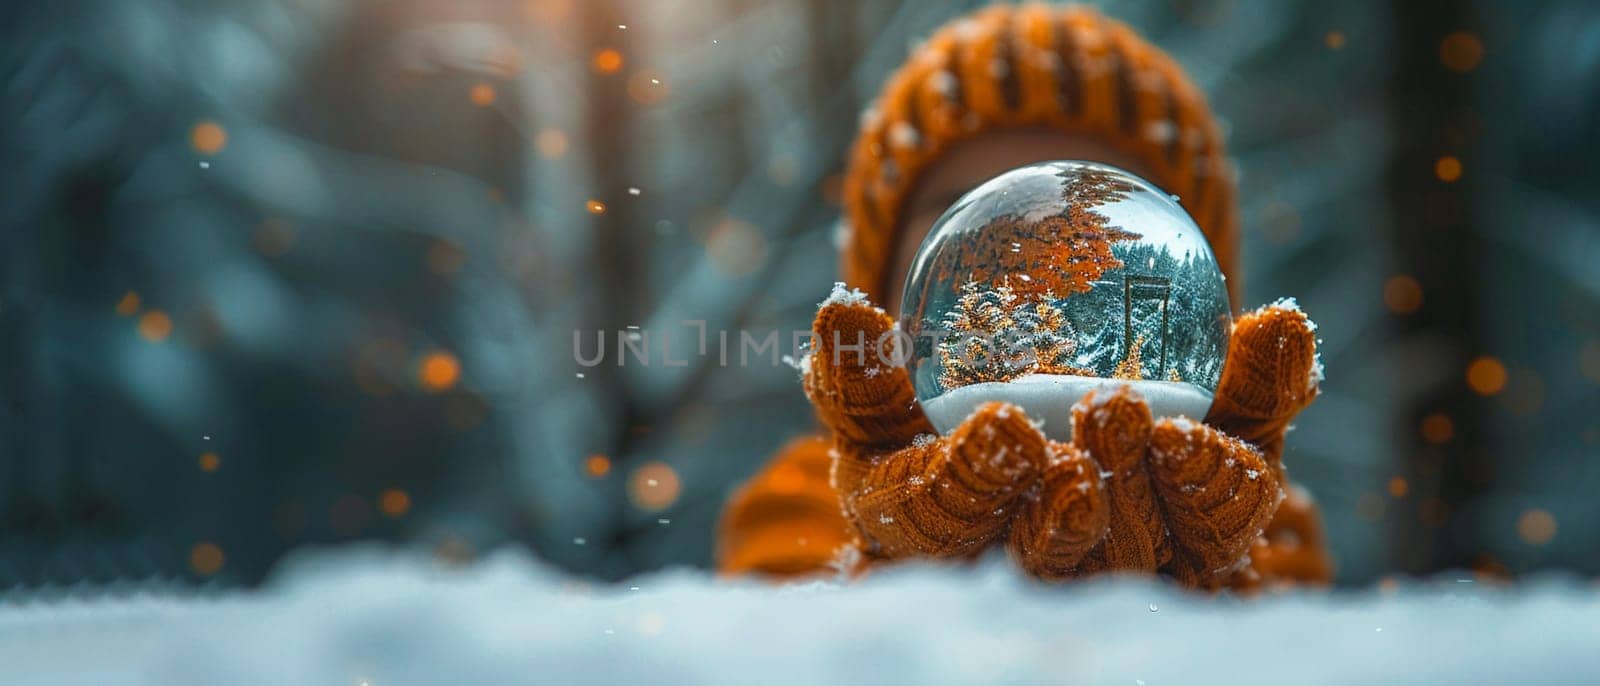 Hand holding a snow globe evoking nostalgia by Benzoix